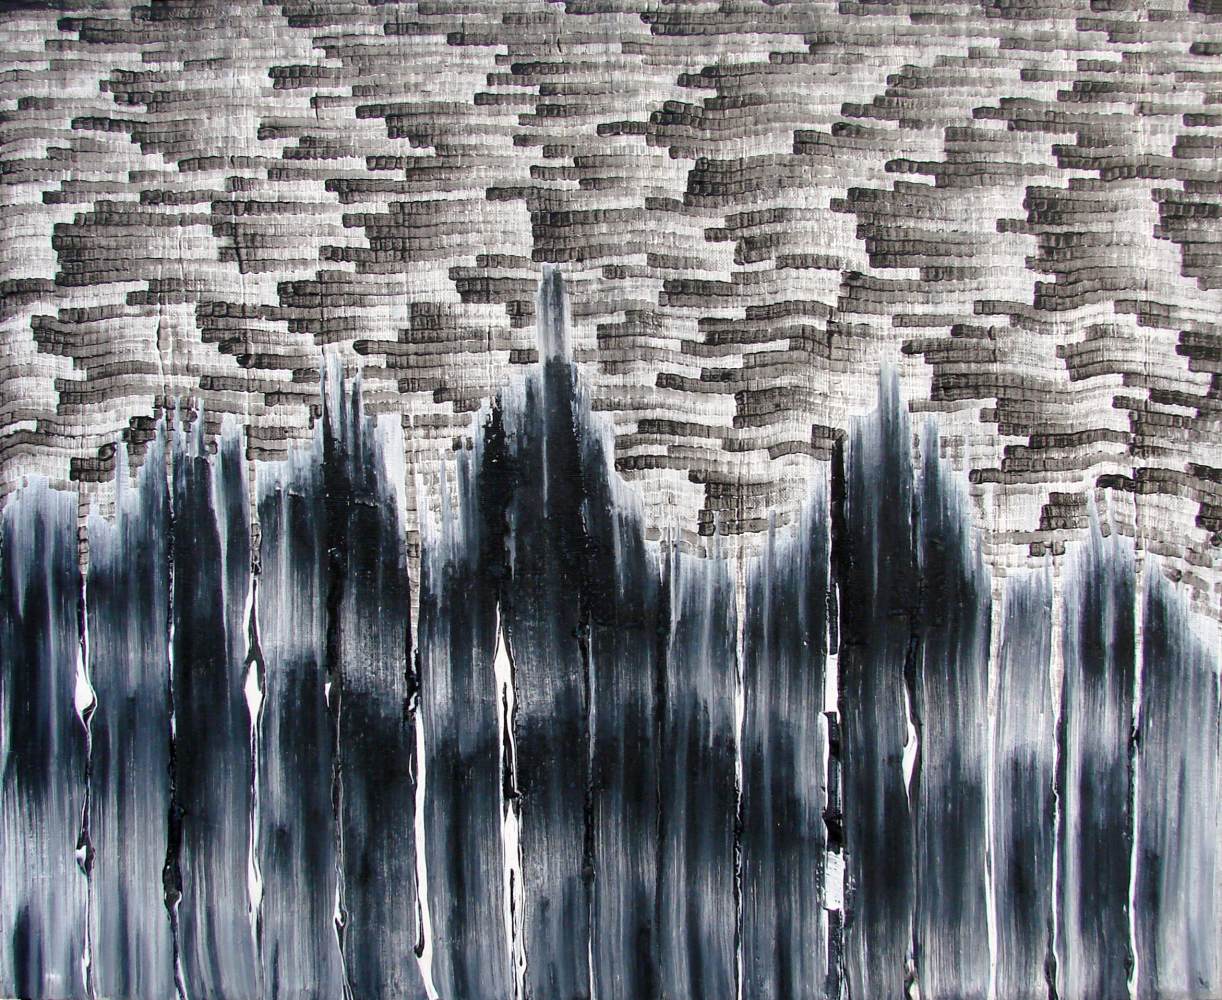 Jan Karpíšek: The Landscape with Time, acryl on canvas, 44x53 cm, 2002 (2007)